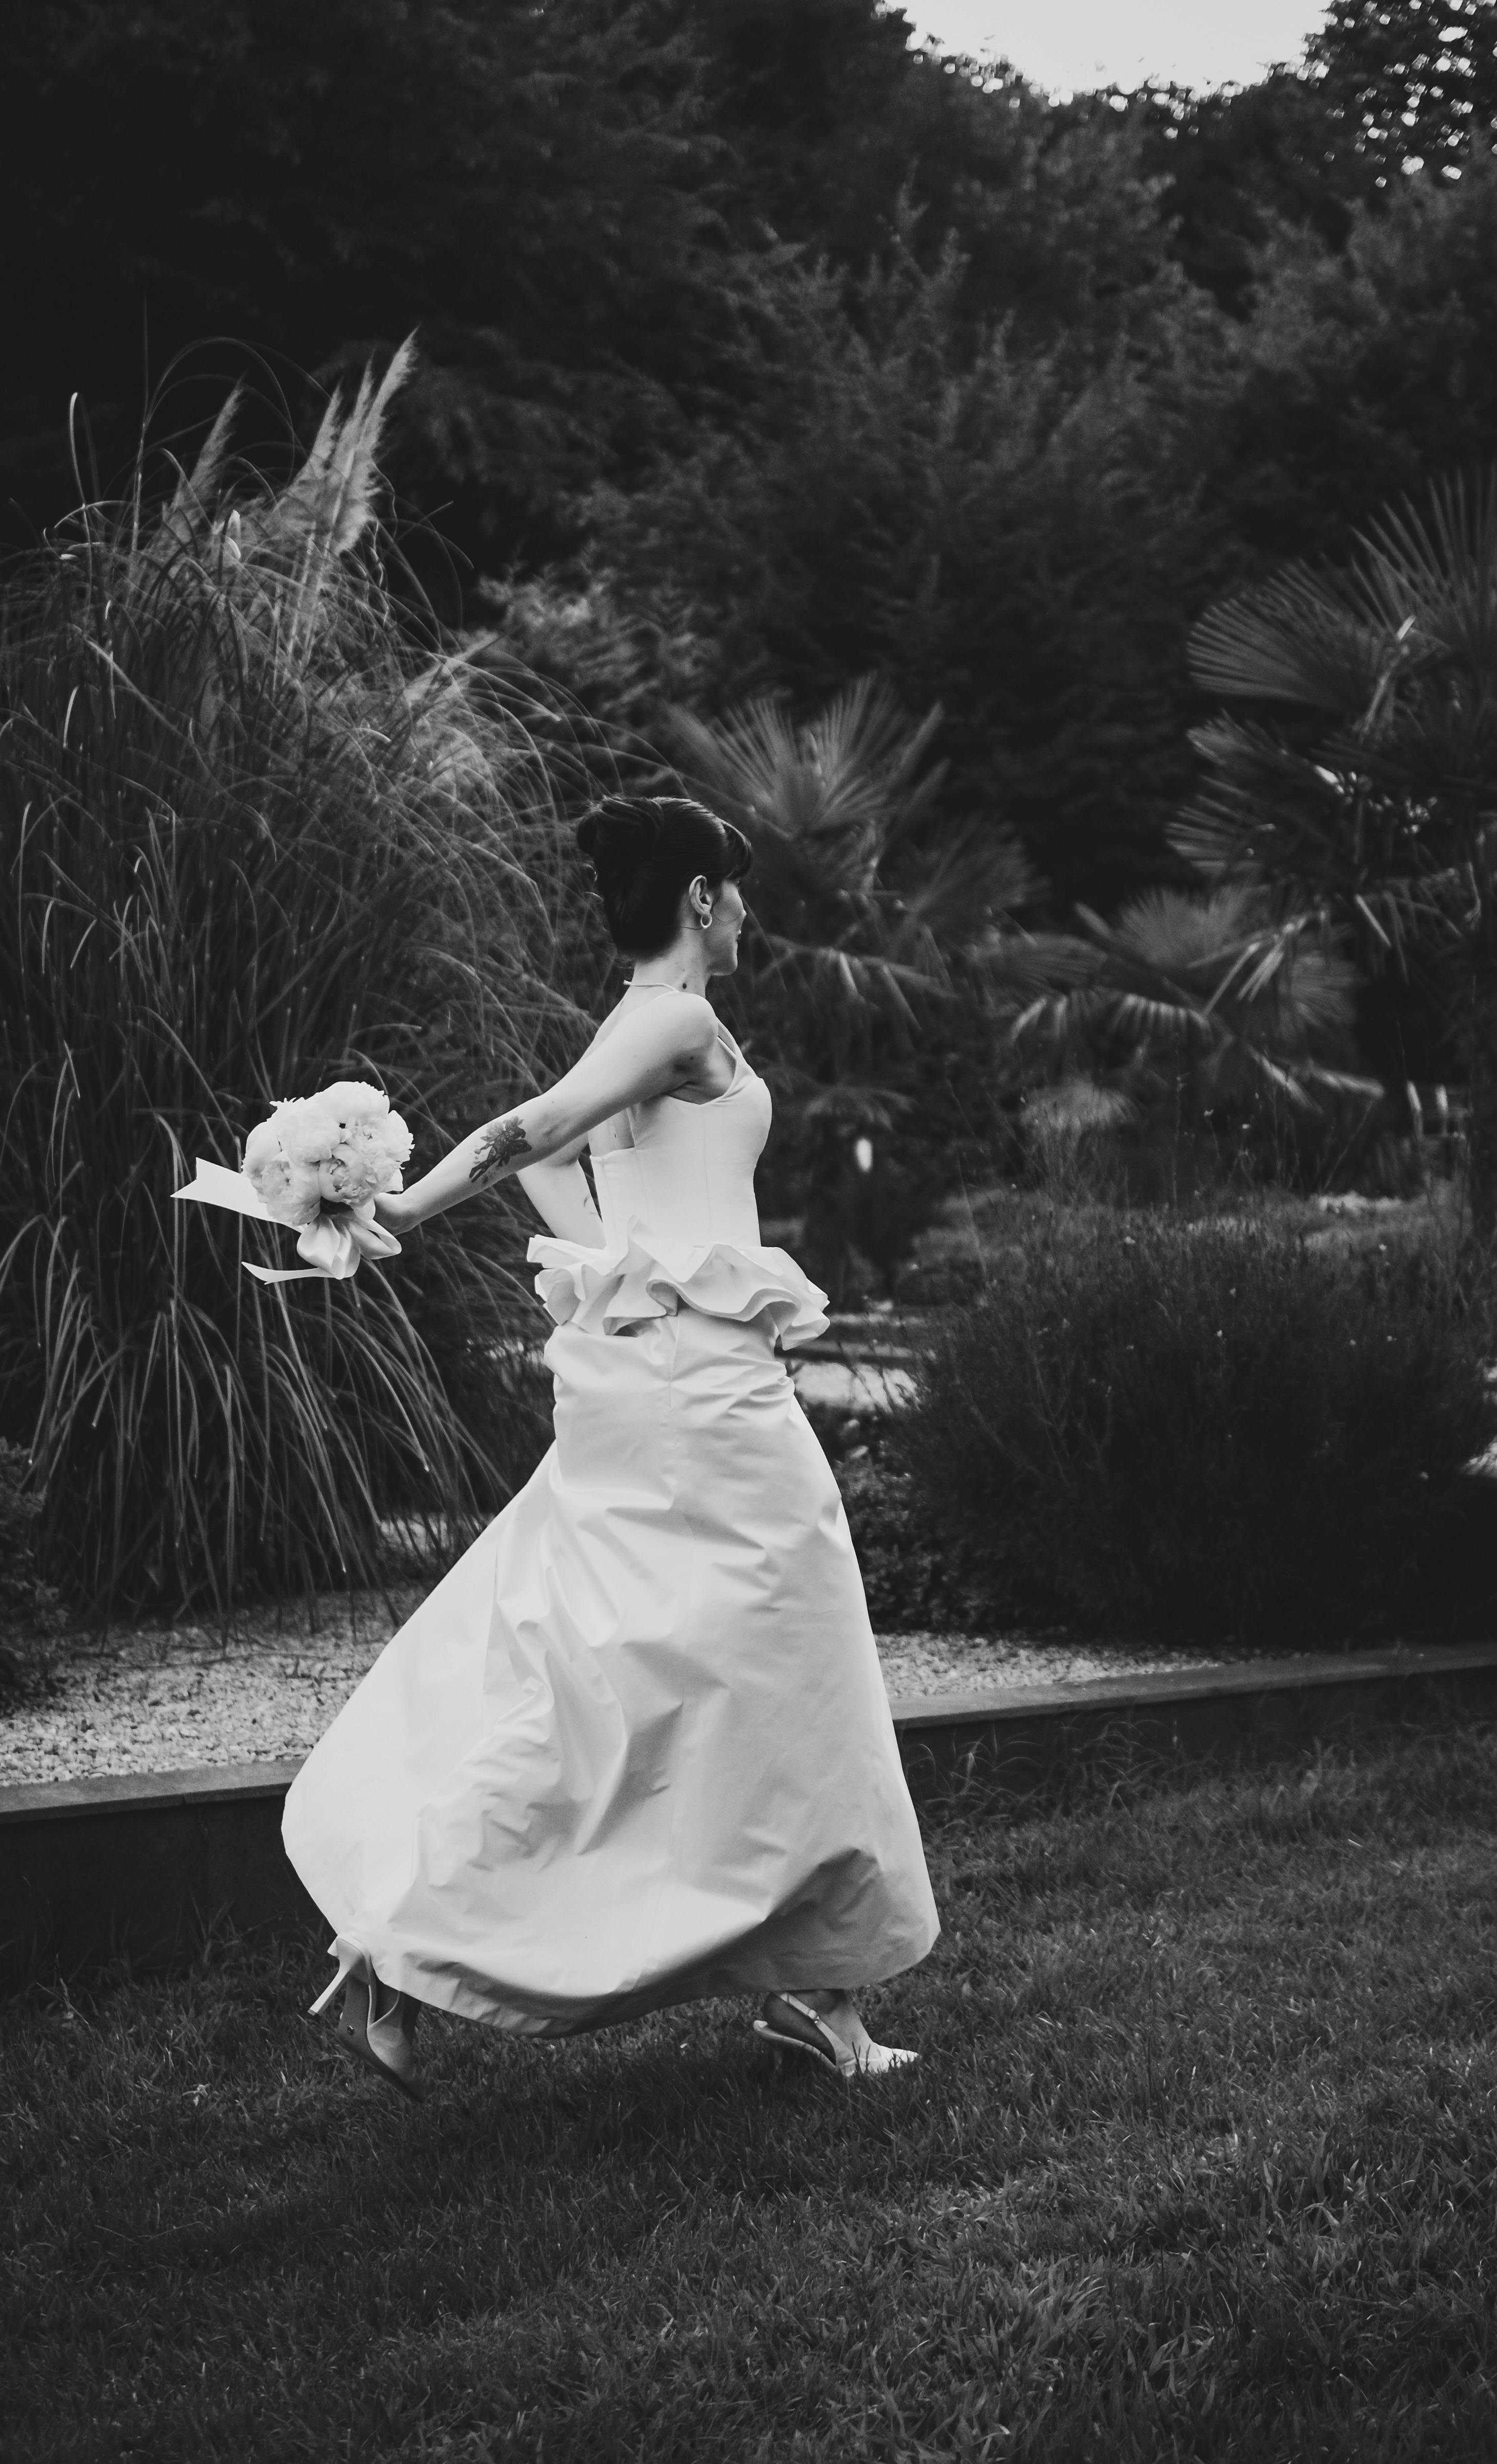 A bride running away | Source: Pexels